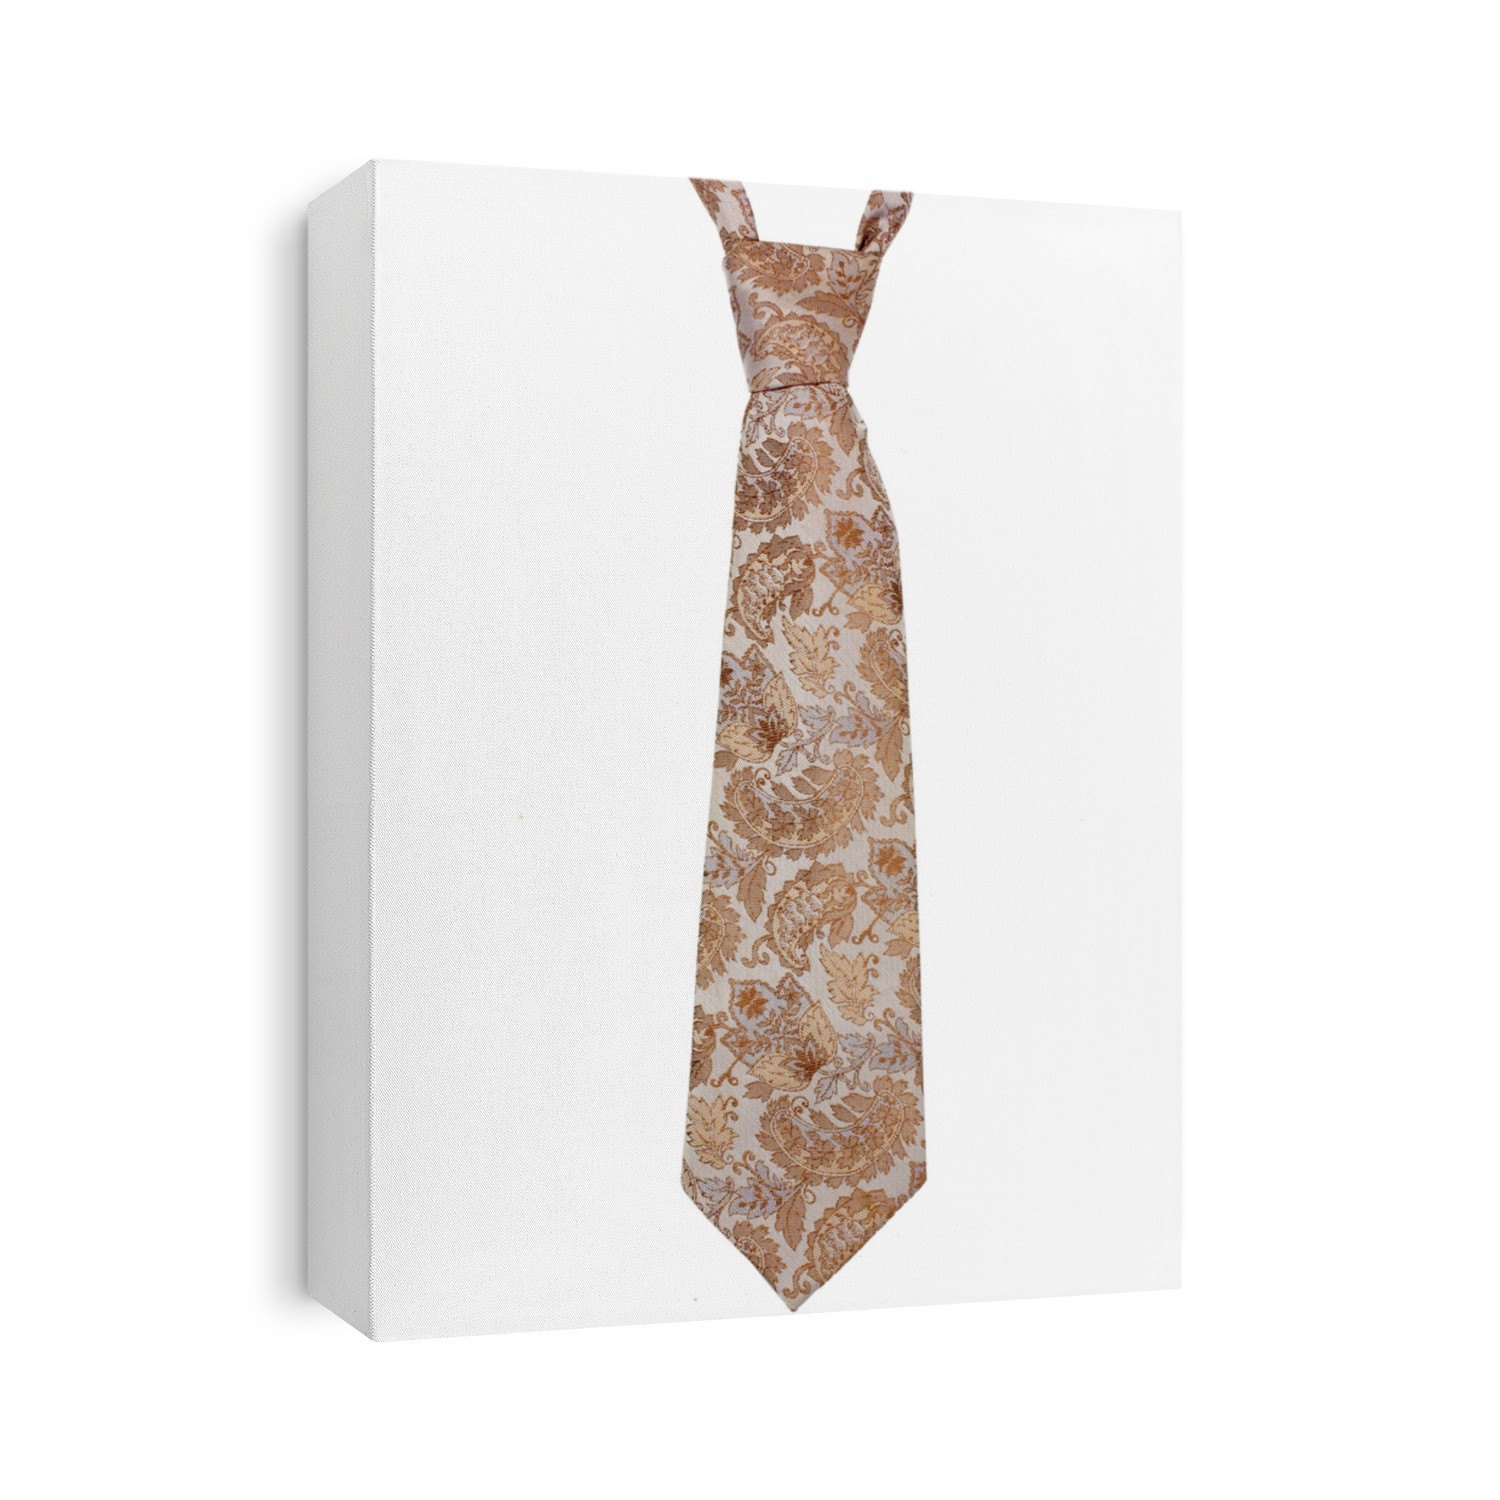 Luxury man's tie isolated on white background